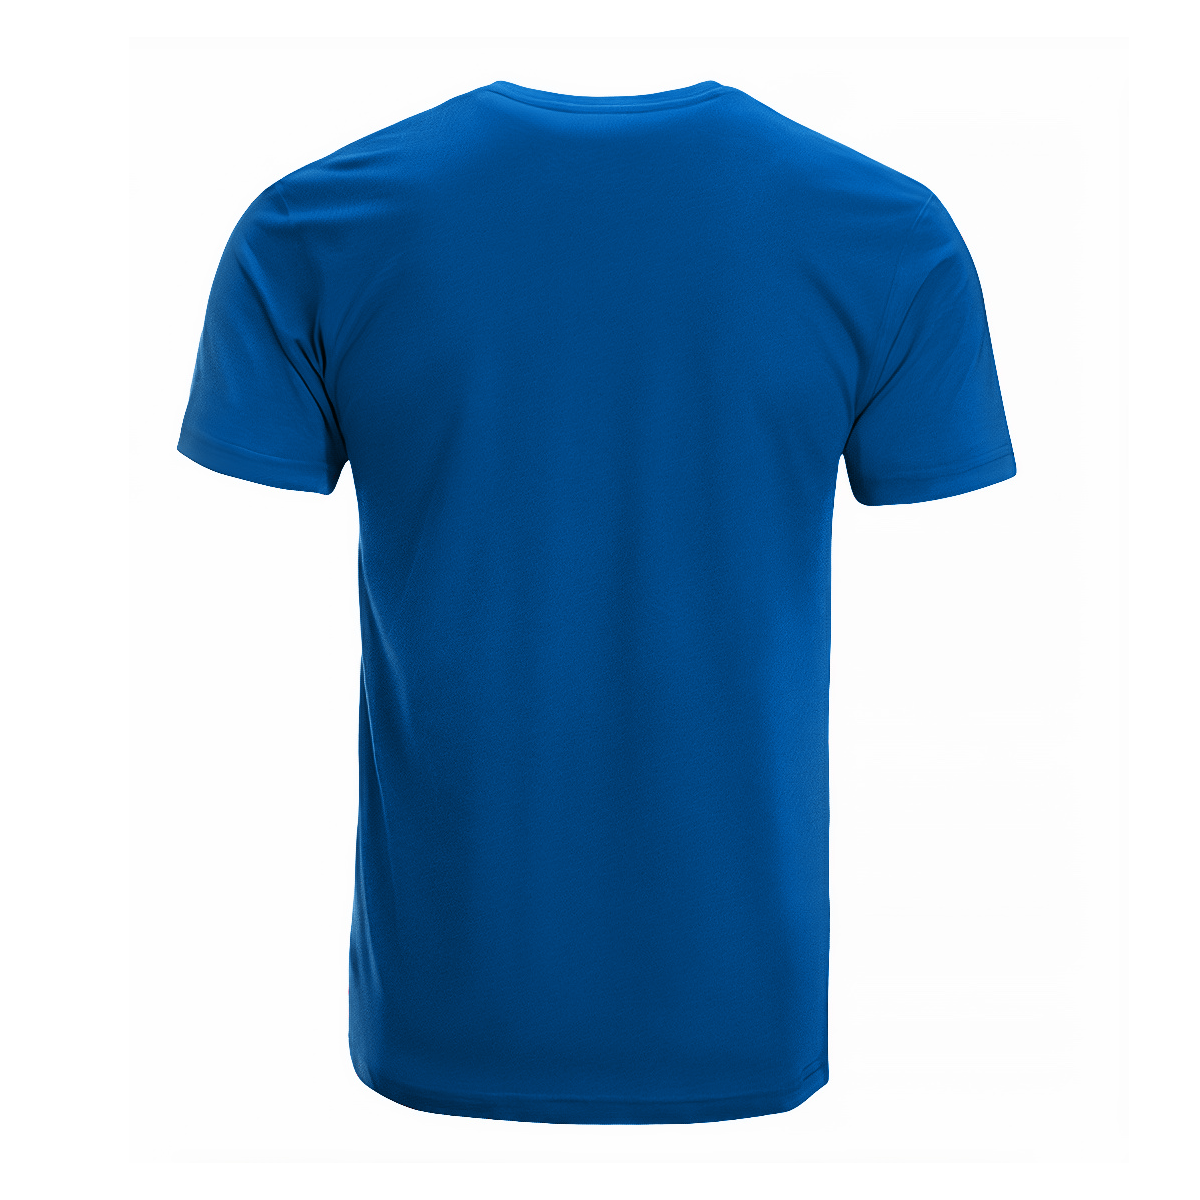 Primrose Tartan Crest T-shirt - I'm not yelling style